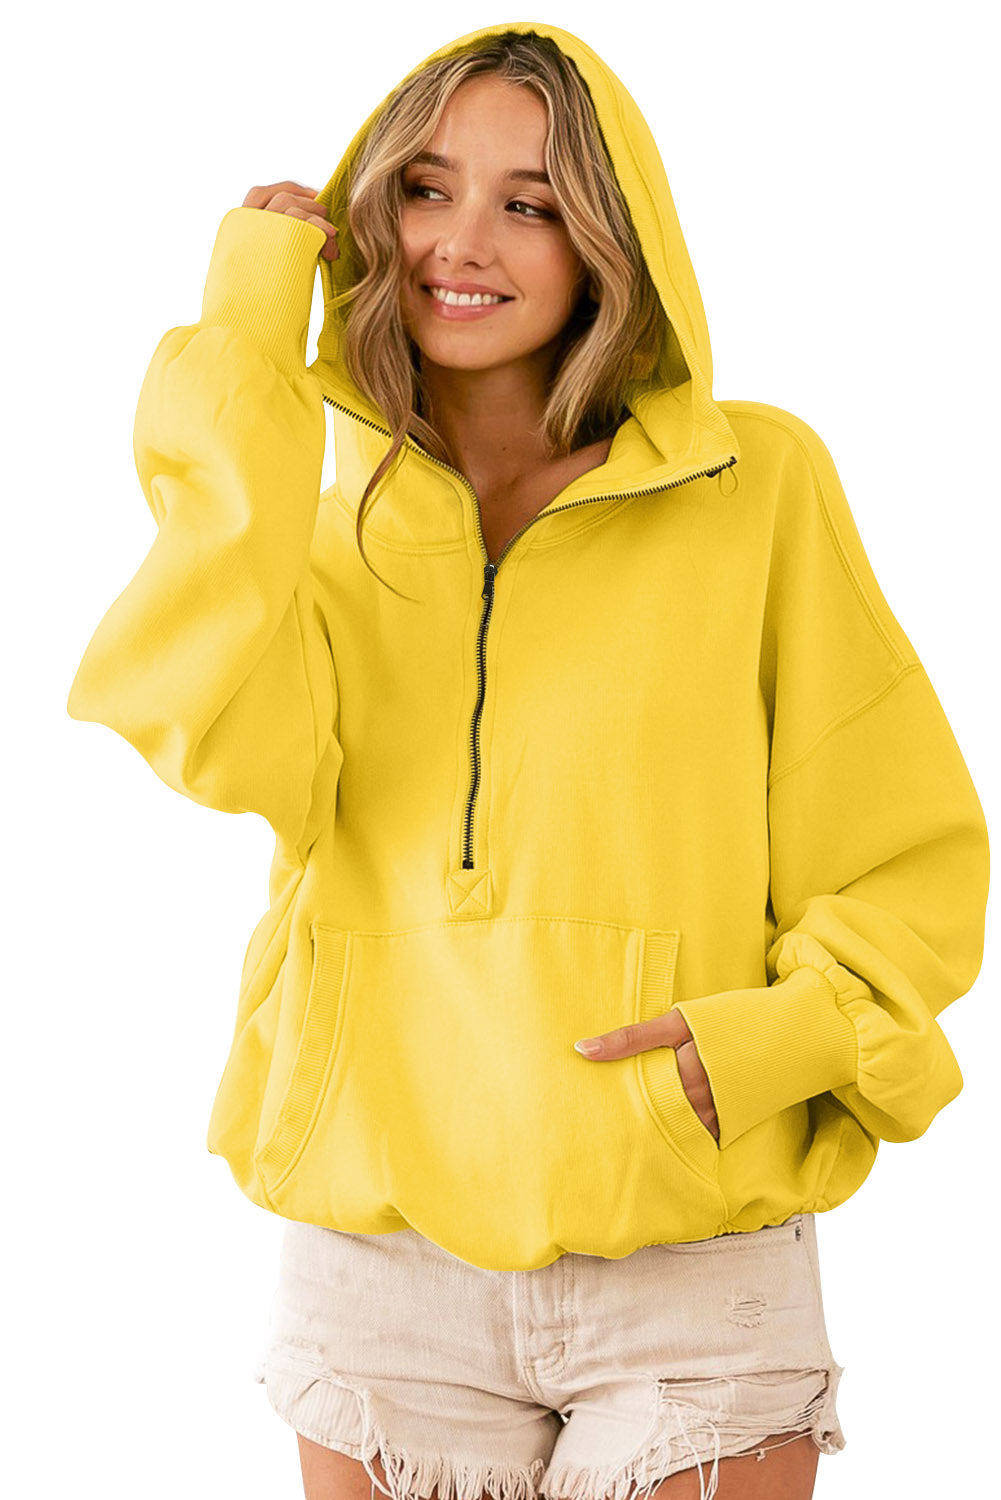 Yellow Solid Color Half Zip Pullover Hoodie with Kangaroo Pocket